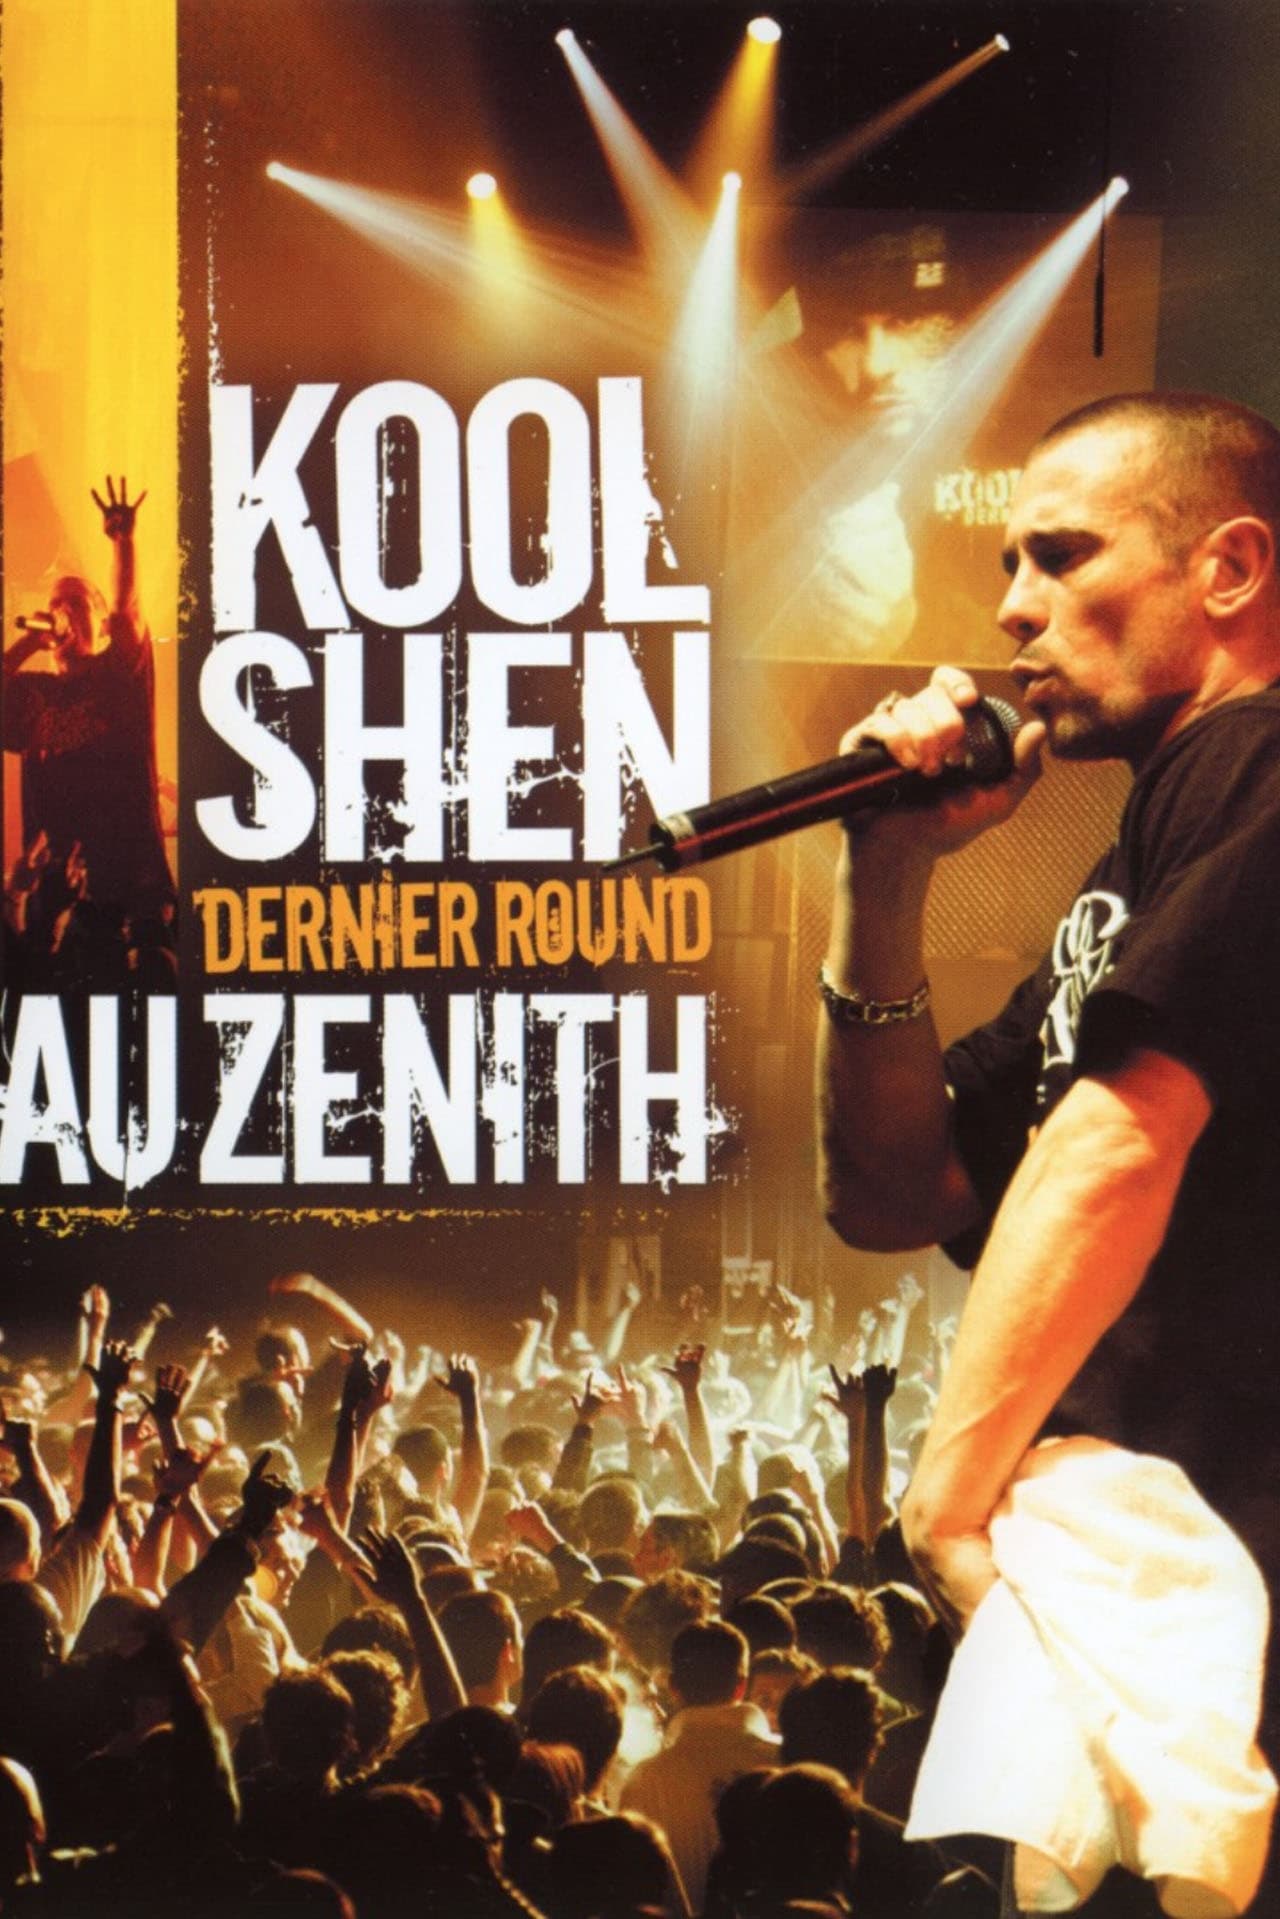 Kool Shen Dernier Round au Zénith